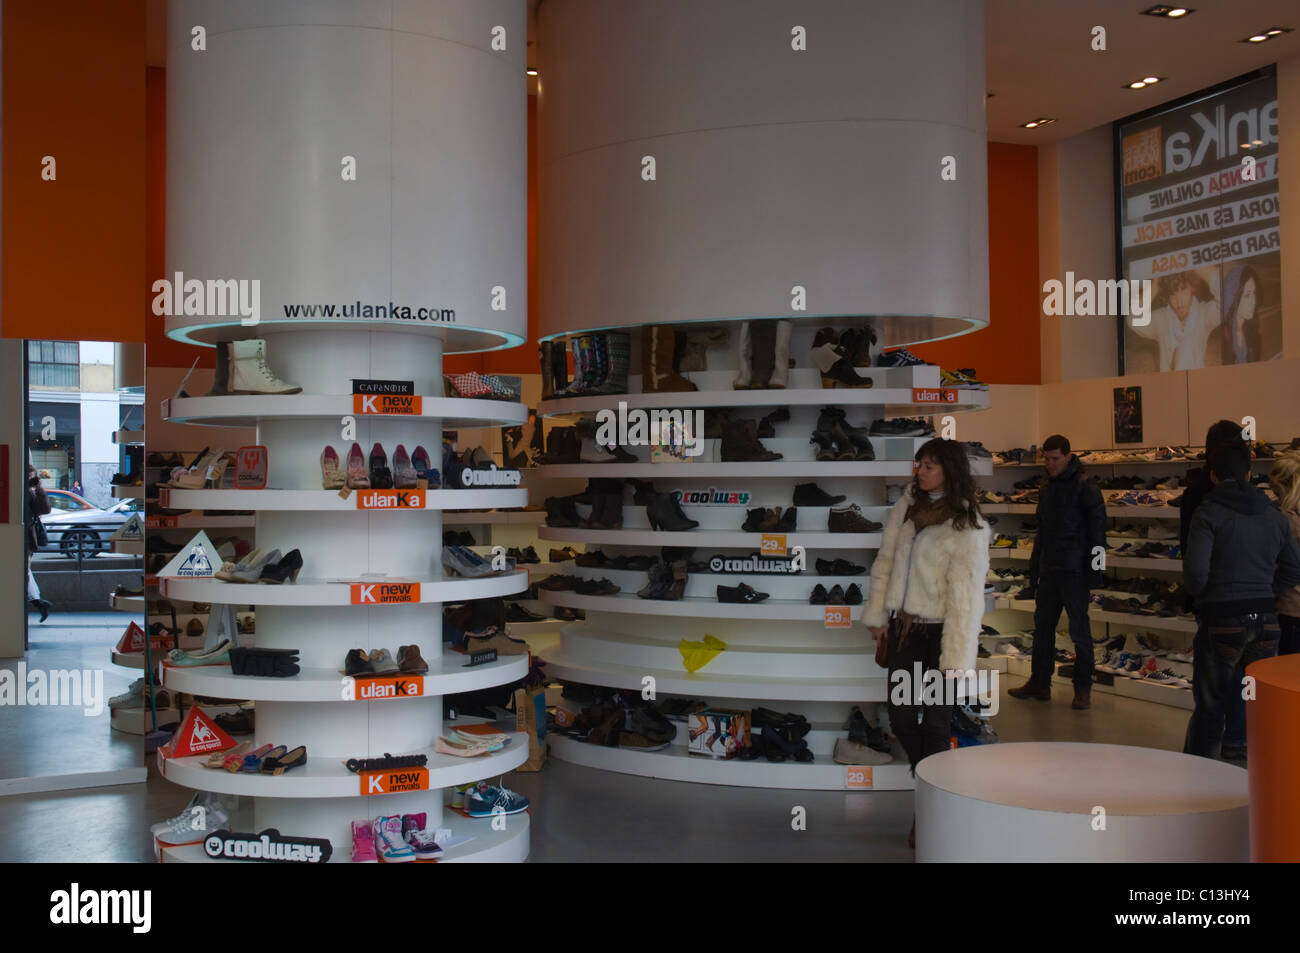 Ulanka shoe shop Plaza de Callao Madrid Spain Europe Photo -